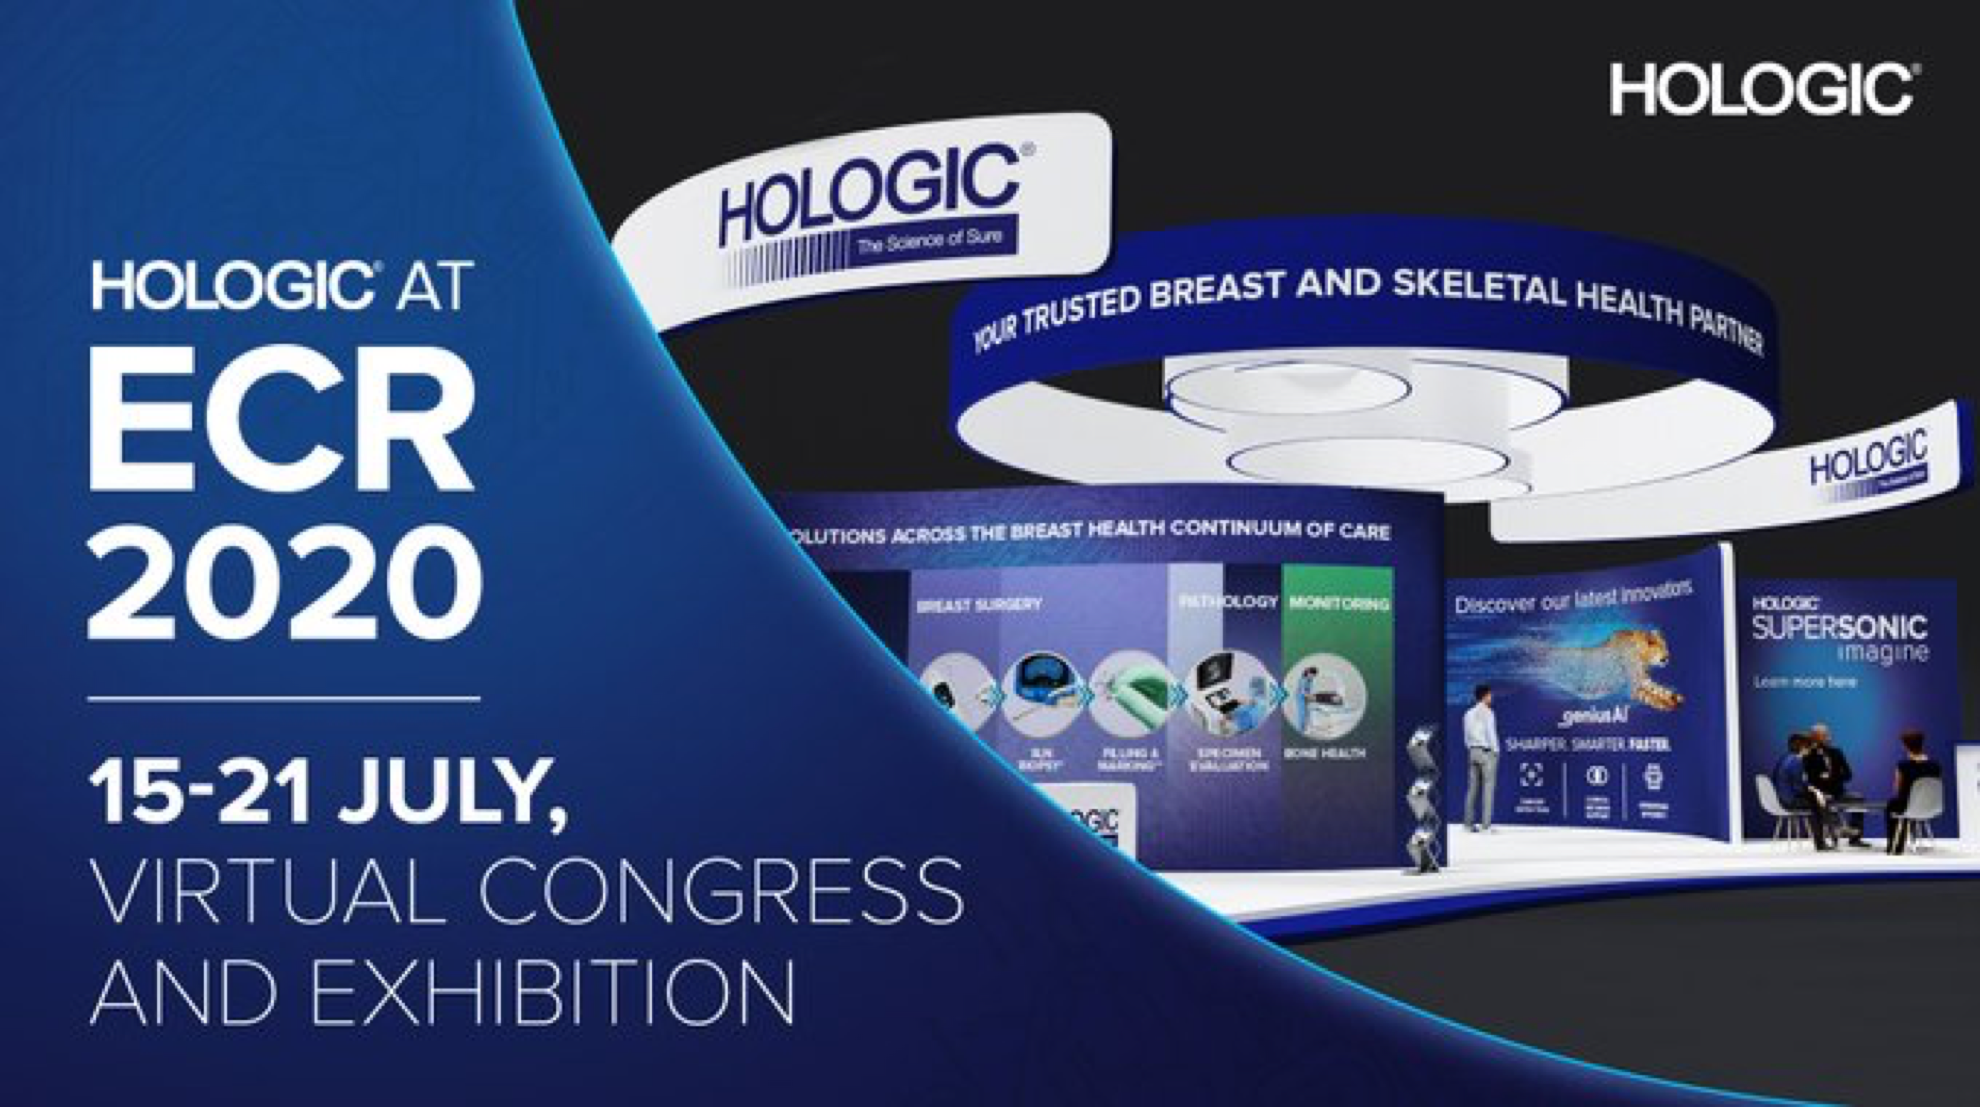 Hologic® Showcased Latest Advances at Virtual ECR Congress 2020